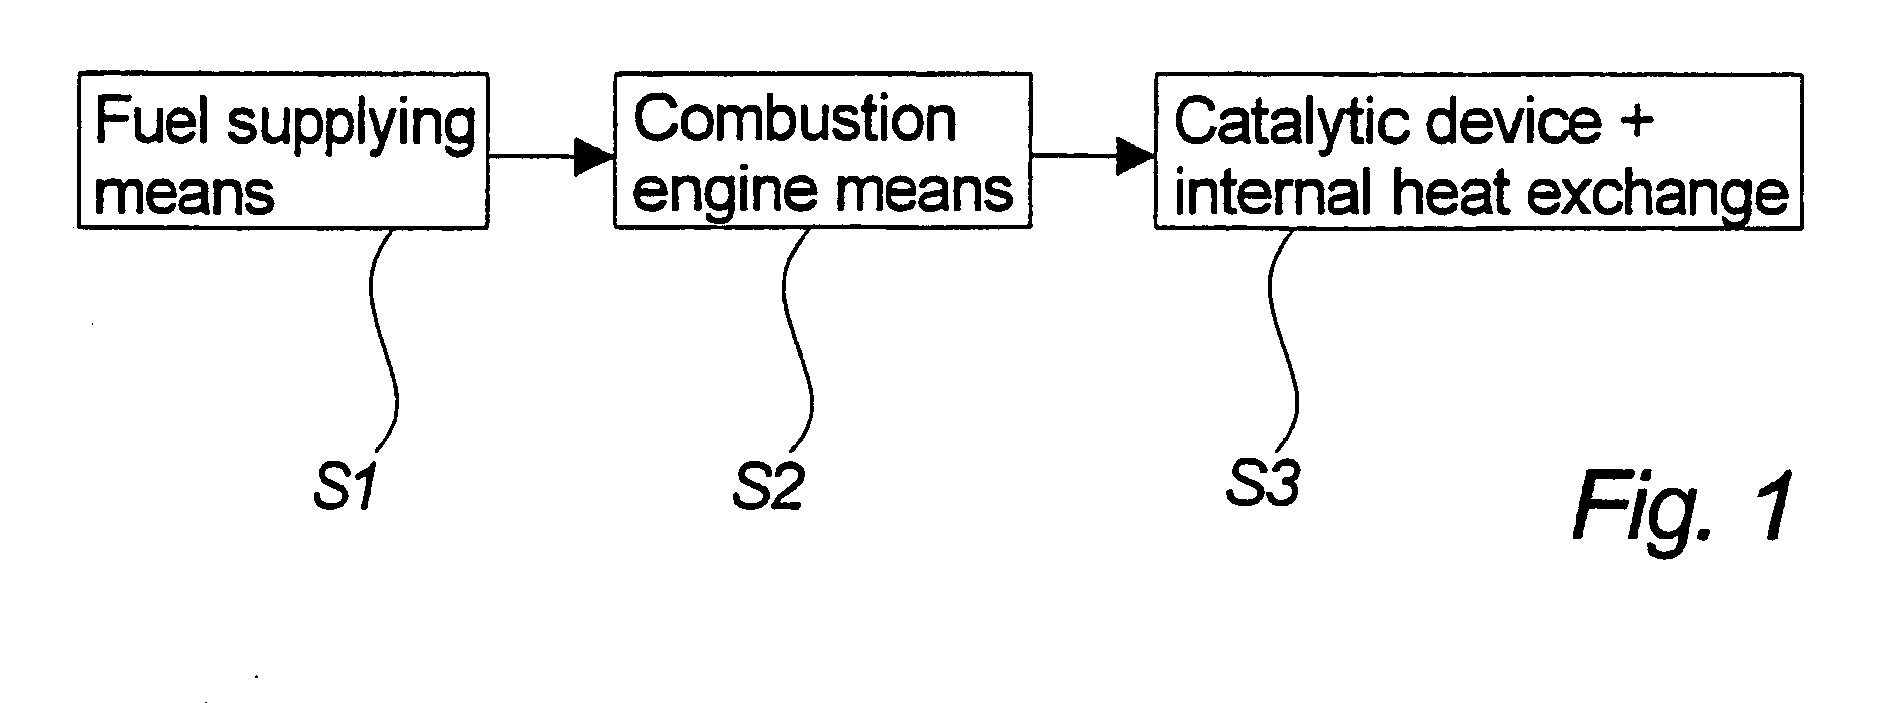 Catalytic device with internal heat exchange